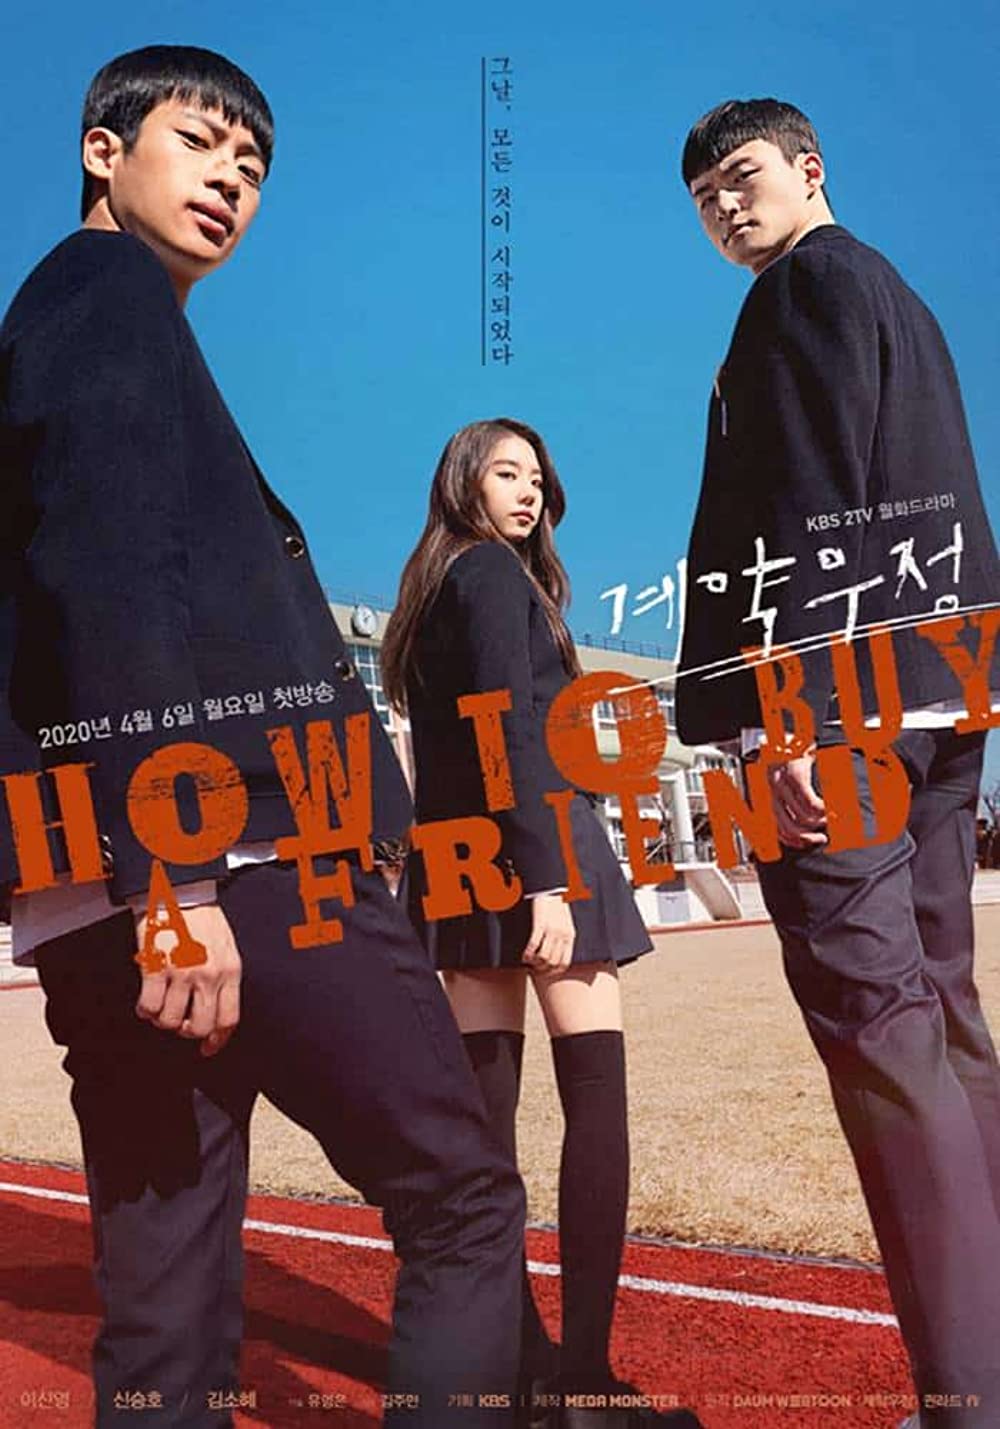 11 Drama Korea sekolah yang mendebarkan, tidak hanya kisah romantis